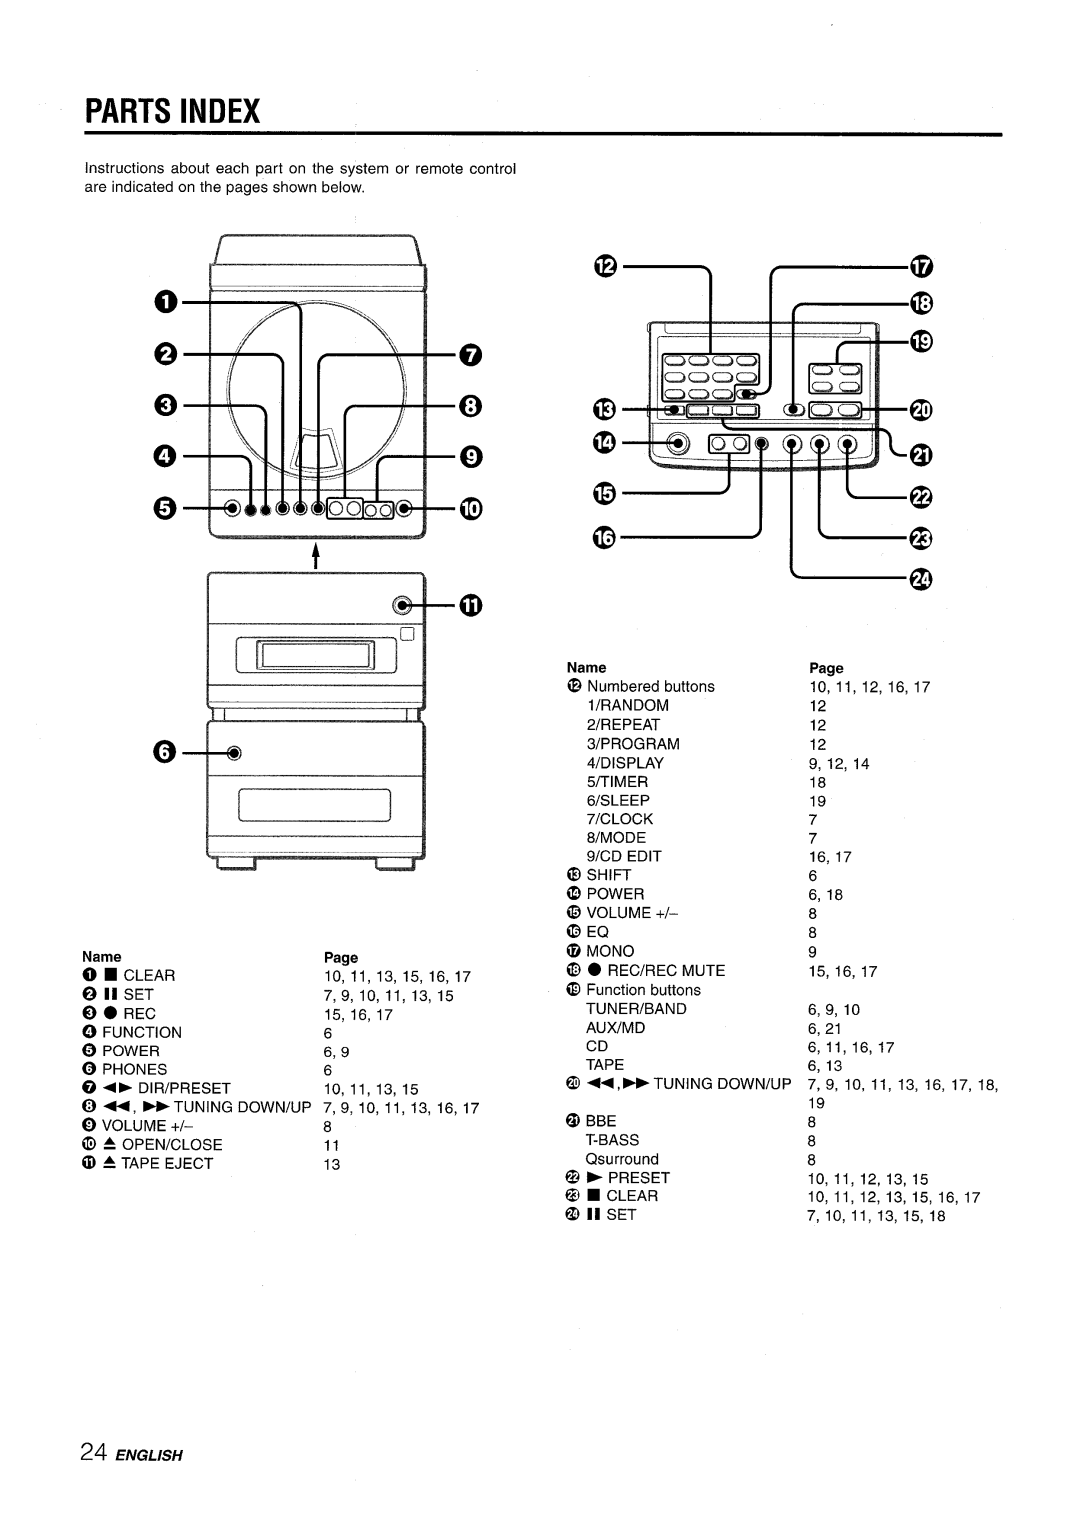 Aiwa XR-M88 manual Parts Index, Name, Page 